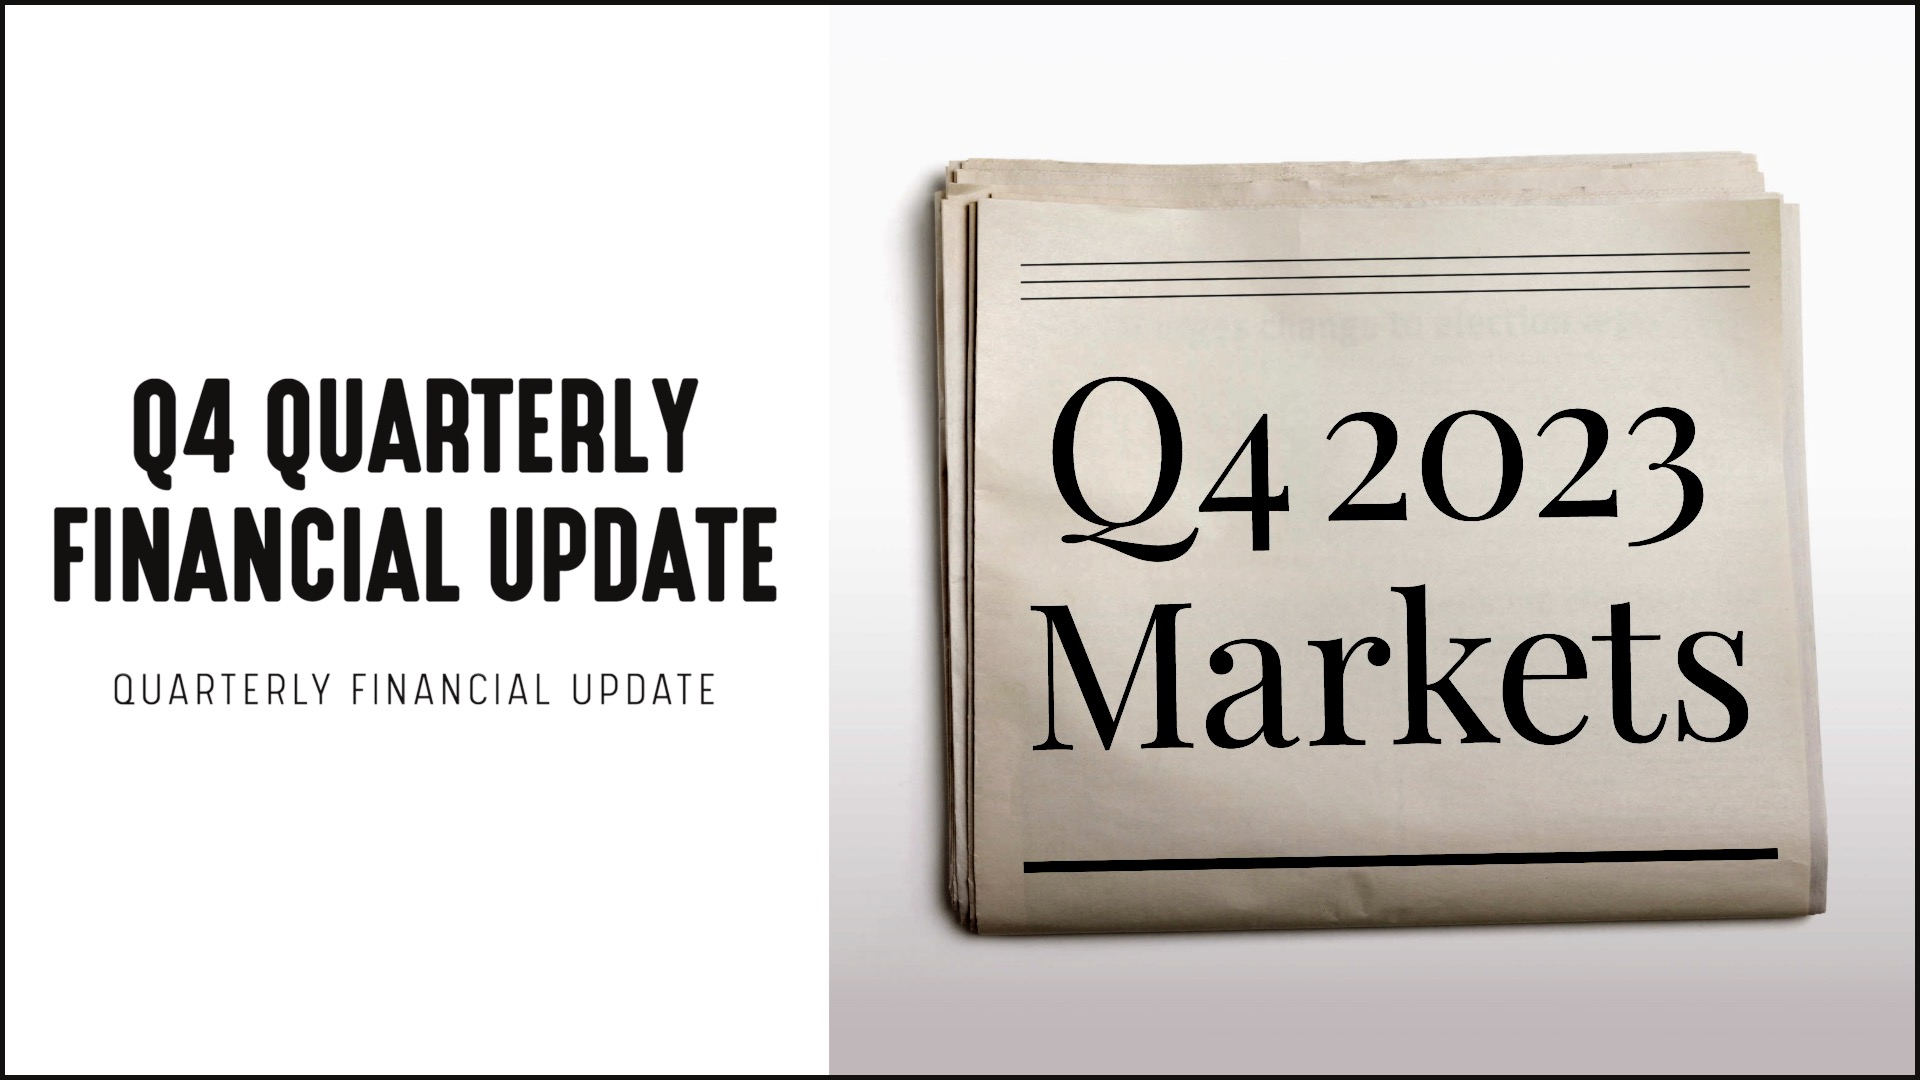 [NEW] Q4 2023 Quarterly Financial Update